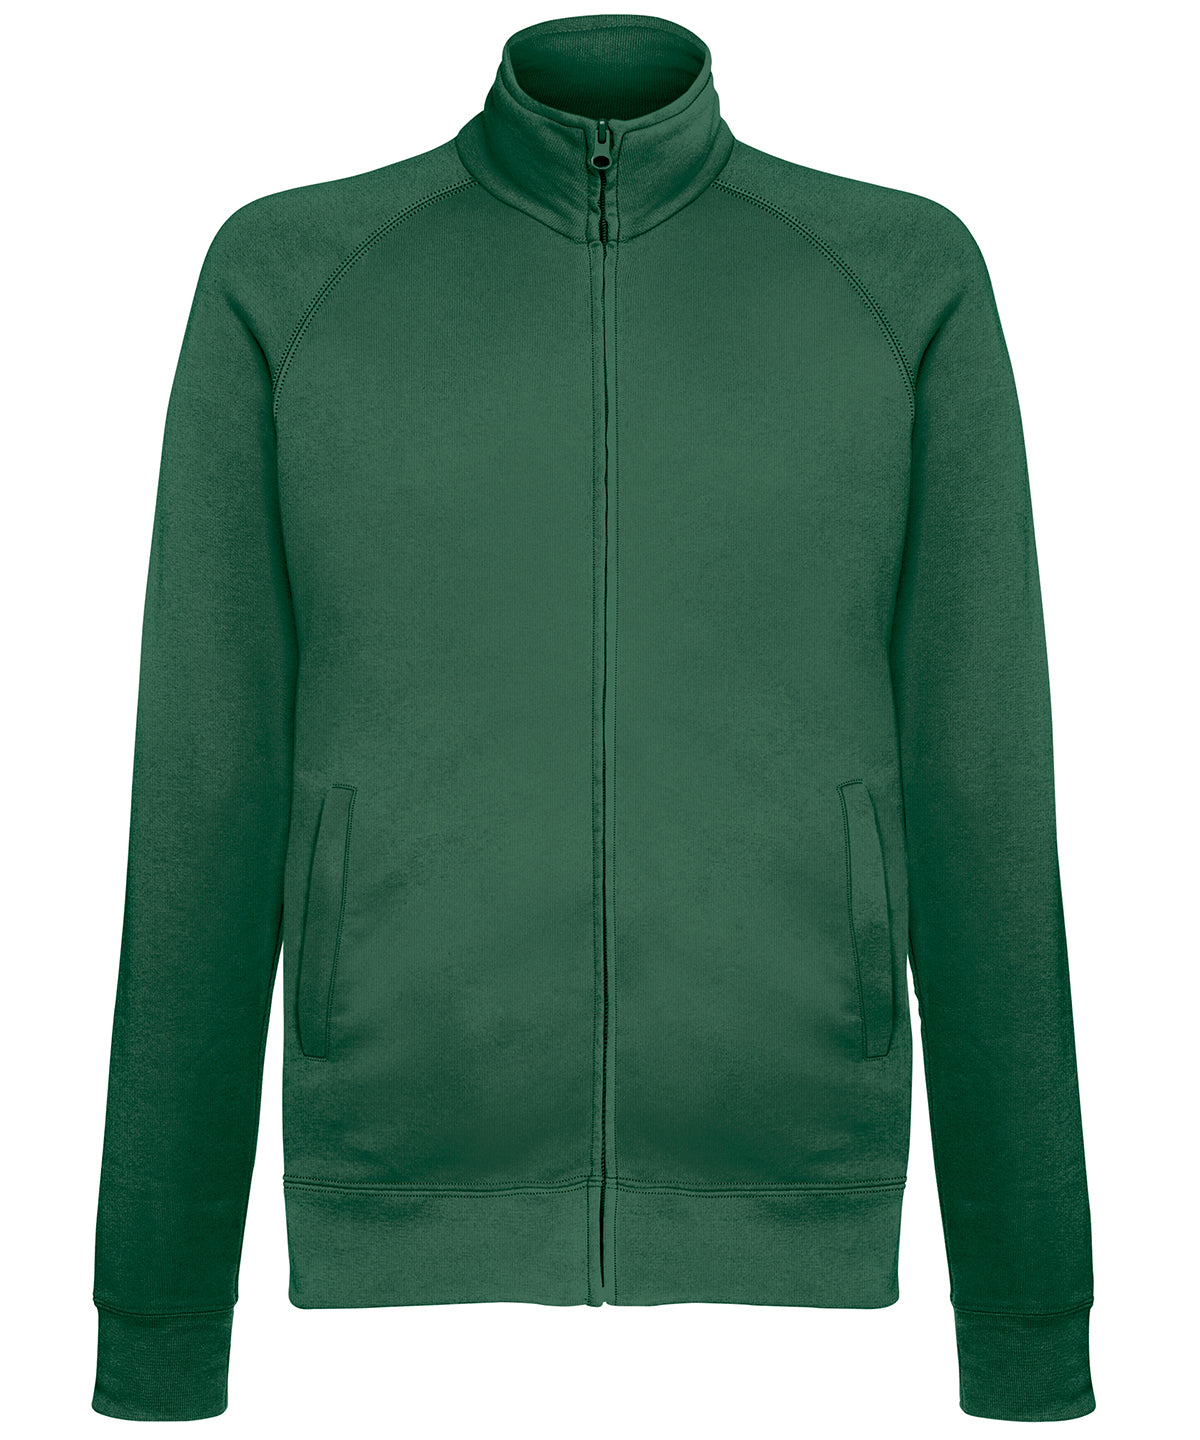 Háskólapeysur - Lightweight Sweatshirt Jacket